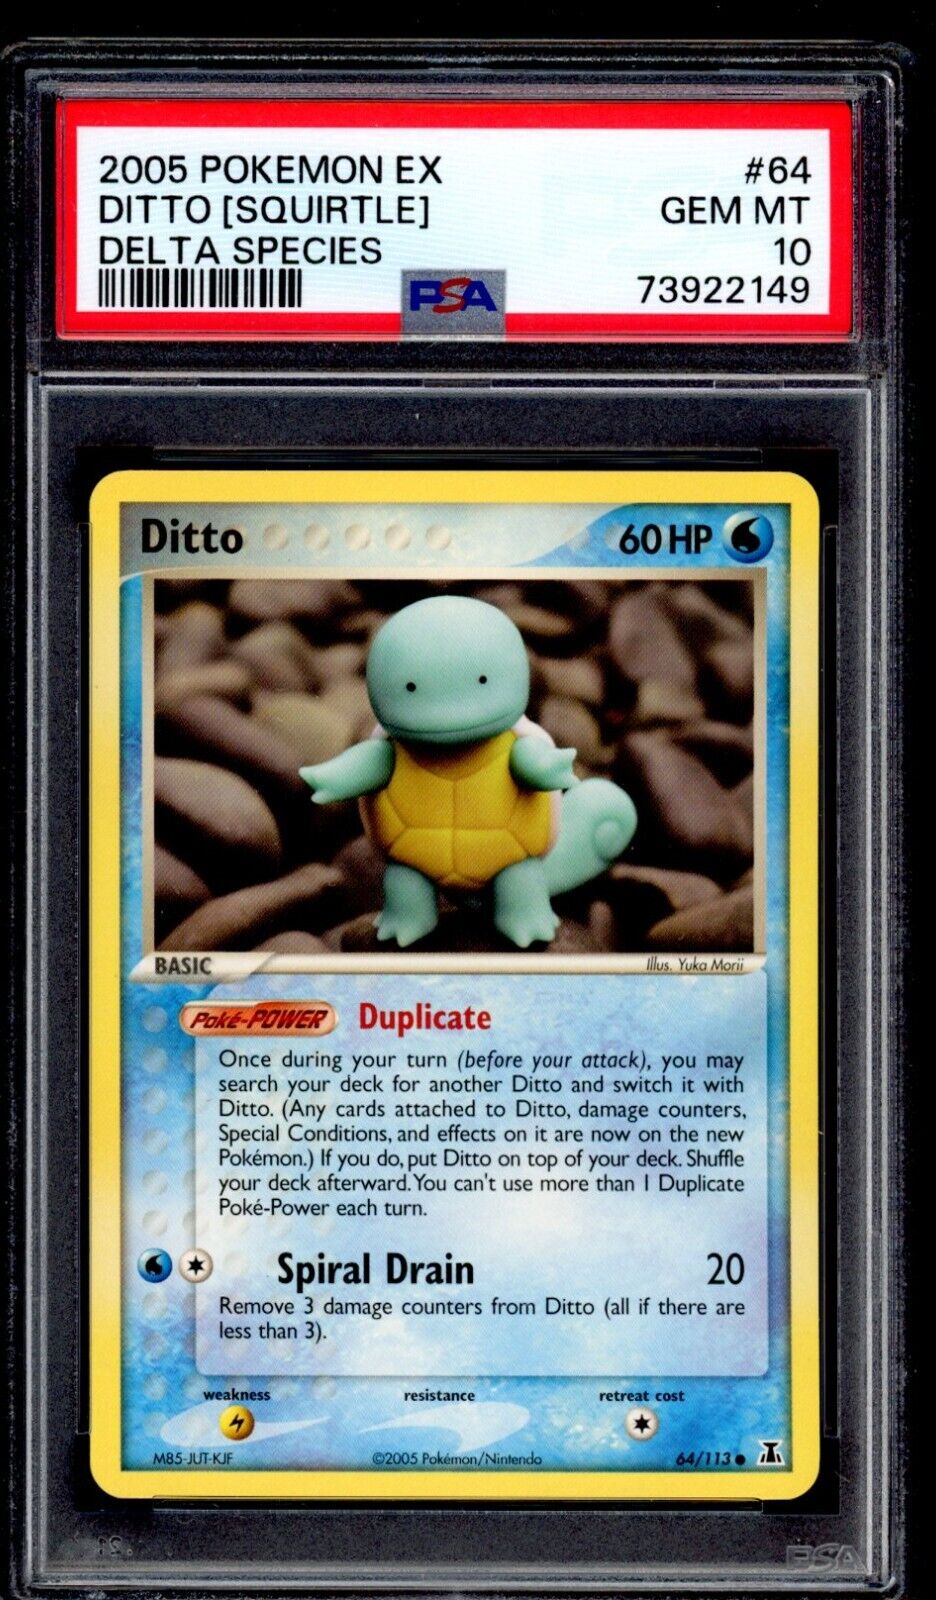 PSA 10 Ditto (Squirtle) 2005 Pokemon Card 64/113 EX Delta Species